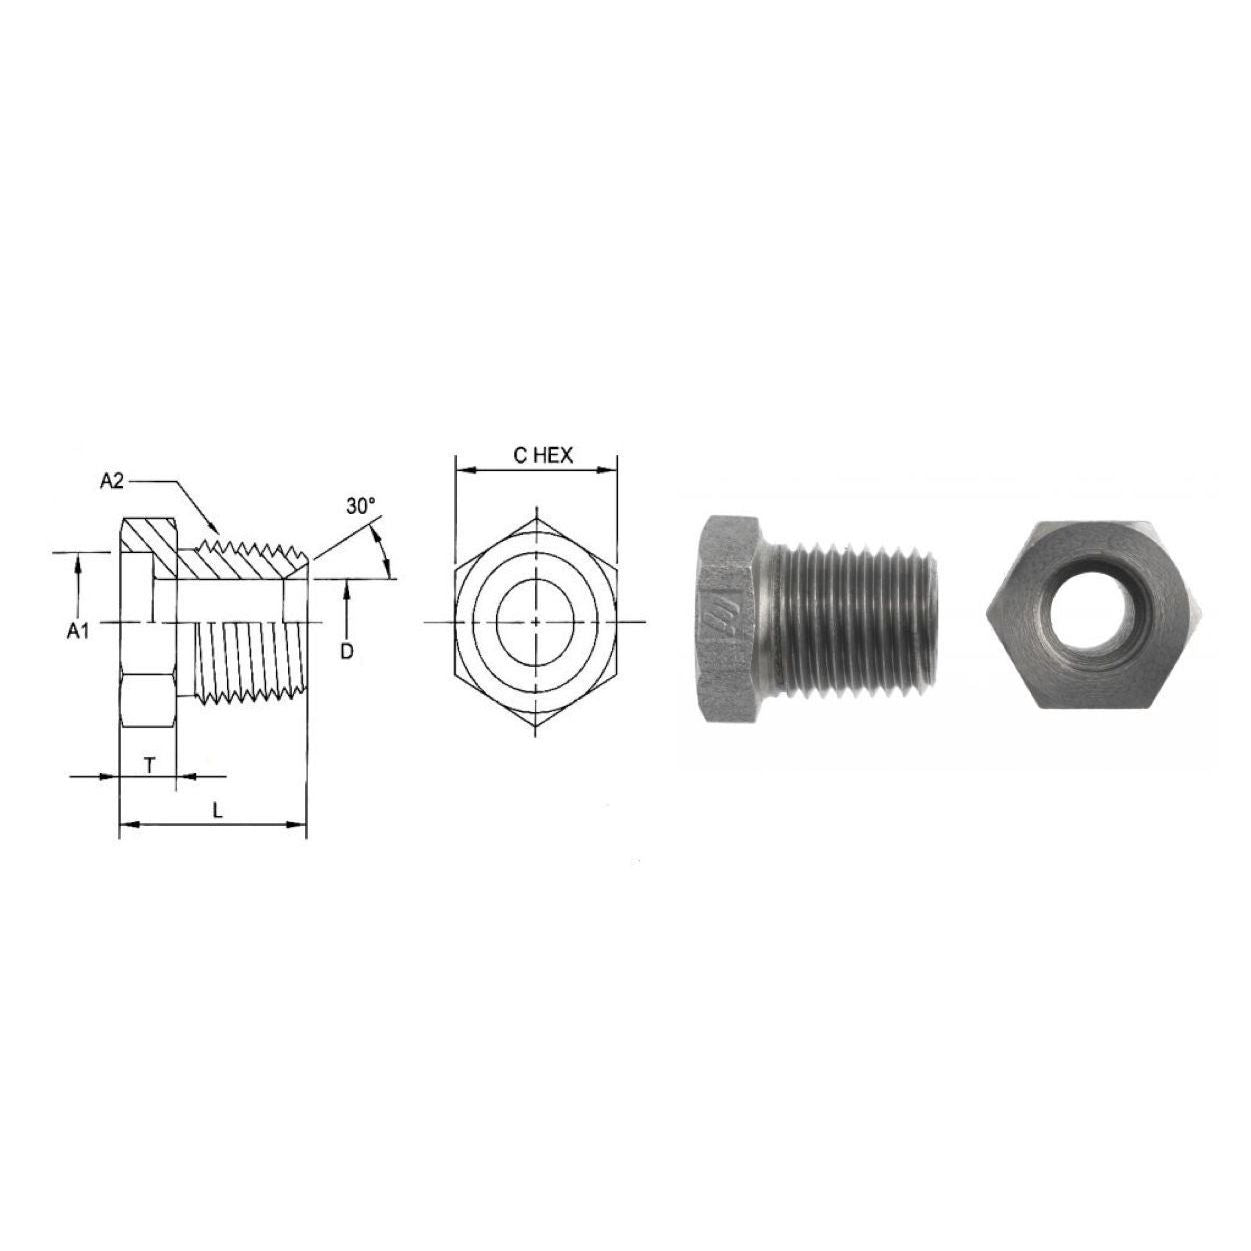 0404-08-06 : OneHydraulics 0.5 (1/2) Bore x 0.375 (3/8) Male NPT Straight Plug, Steel